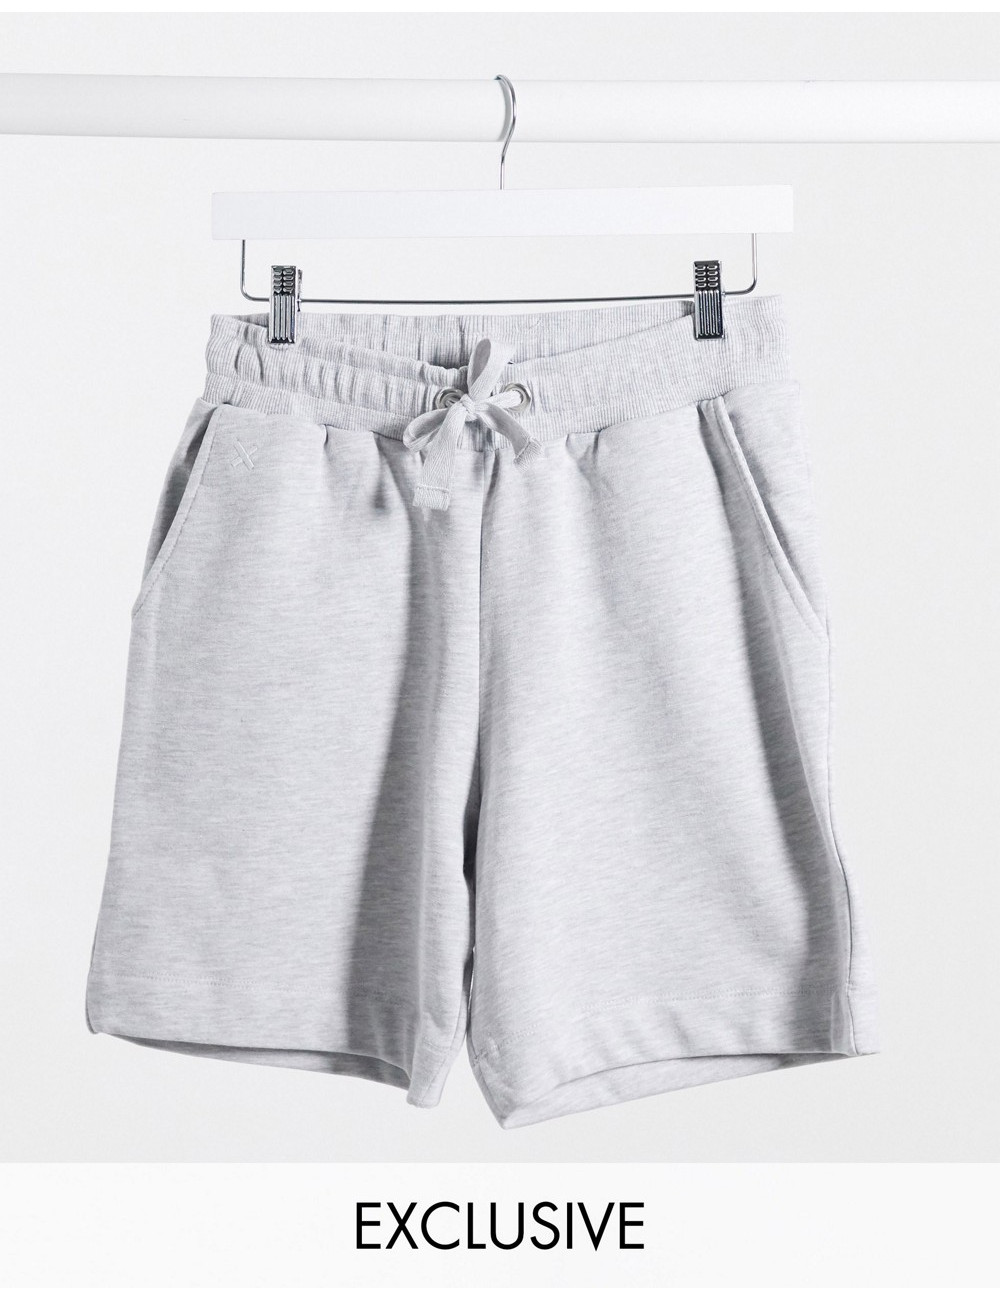 COLLUSION shorts in grey marl